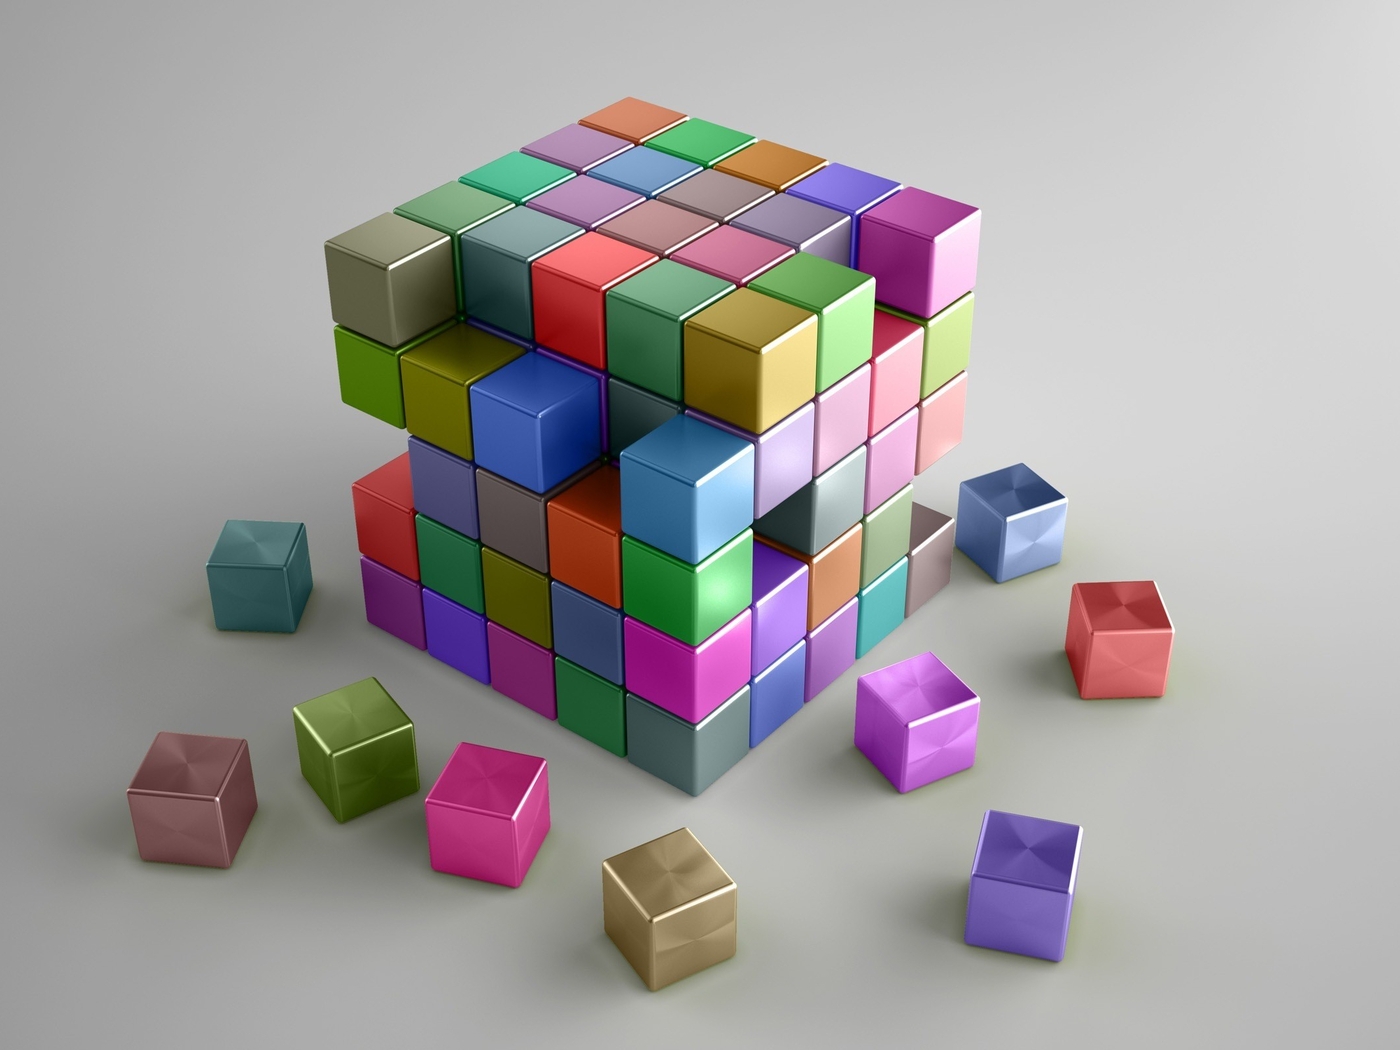 Image: Volume, cubes, color, modeling